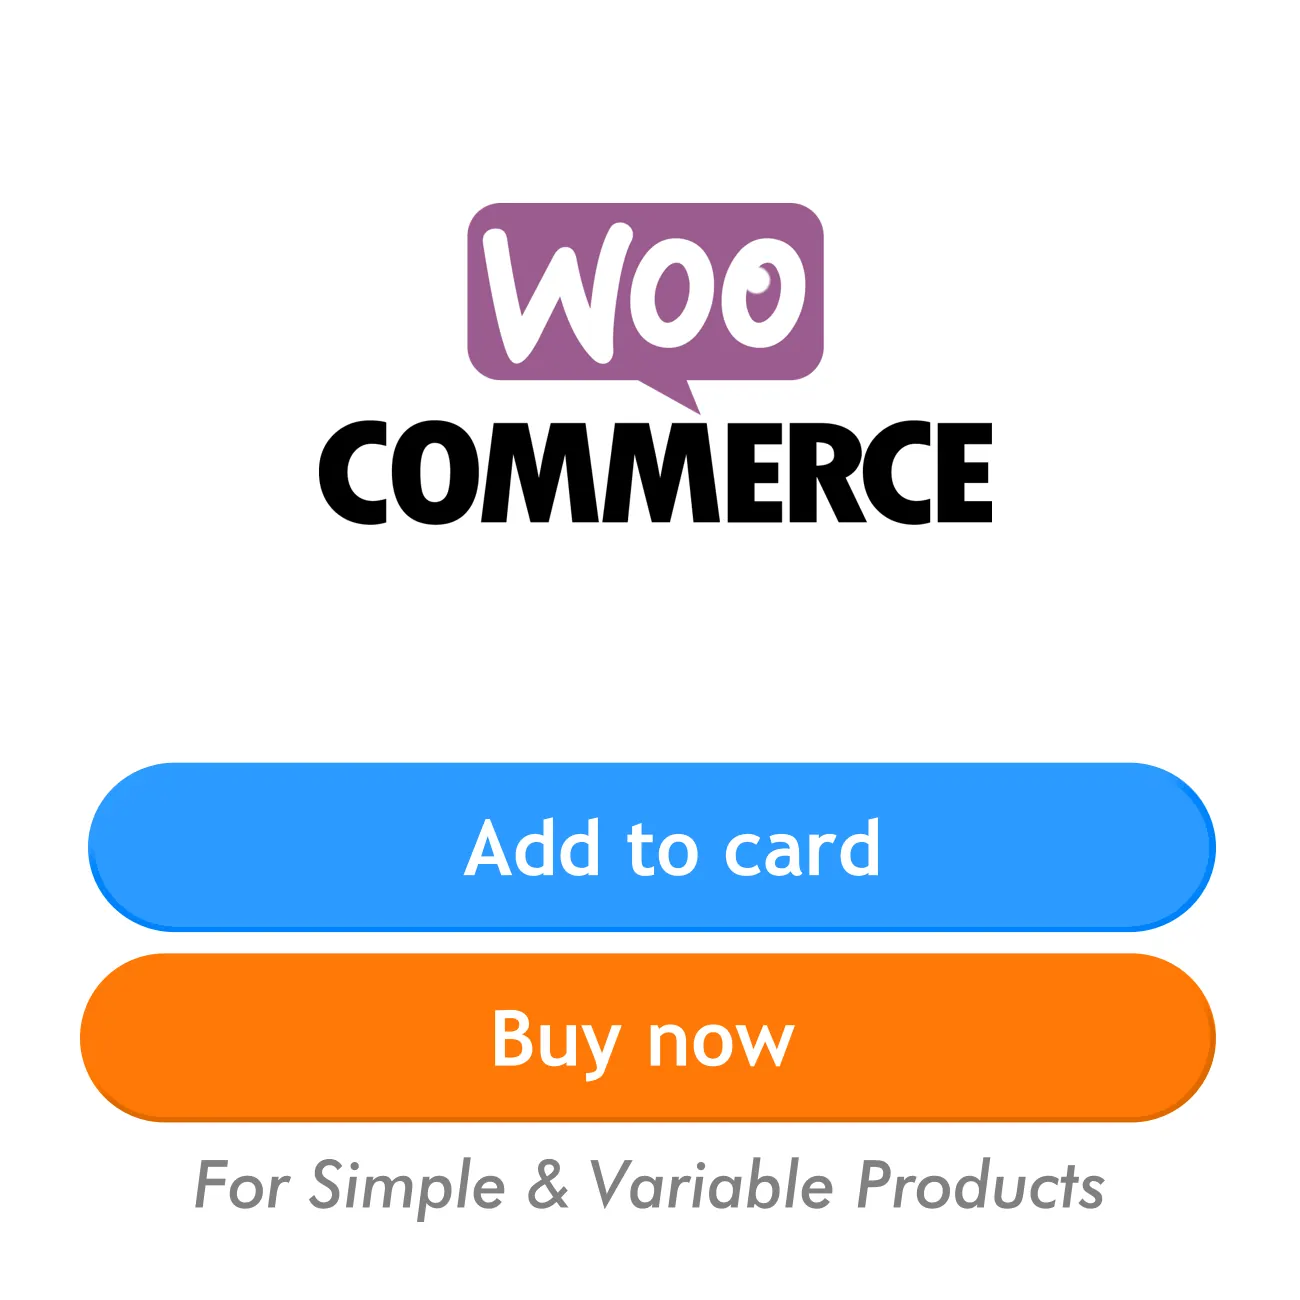 Buy Again for WooCommerce